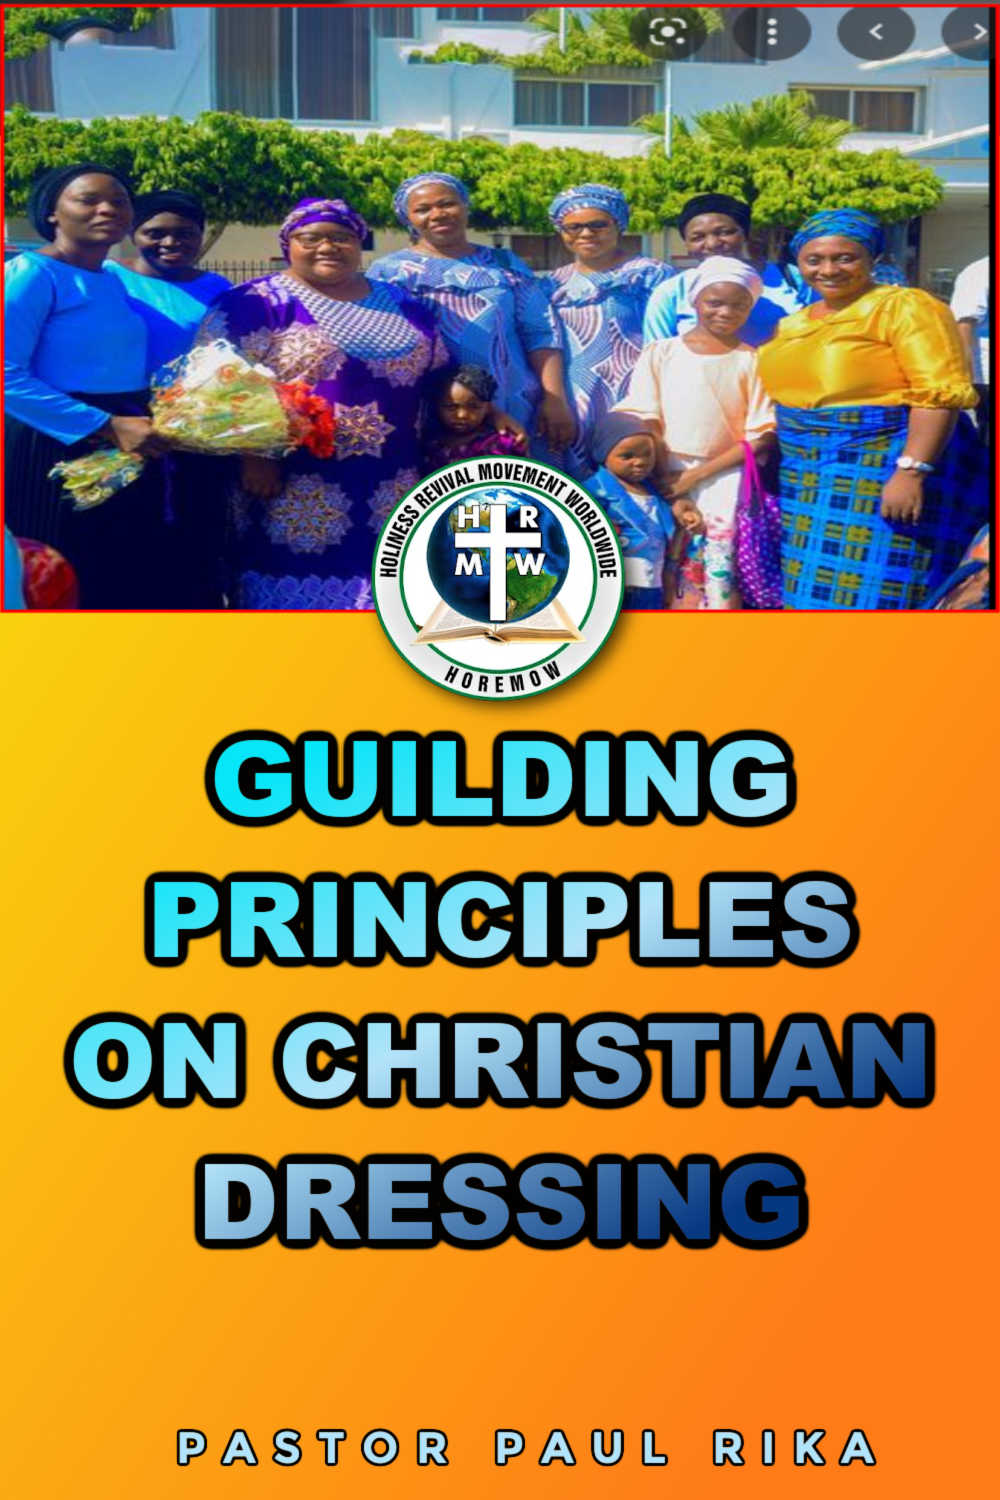 GUILDING PRINCIPLES ON CHRISTIAN DRESSING - Holiness Revival